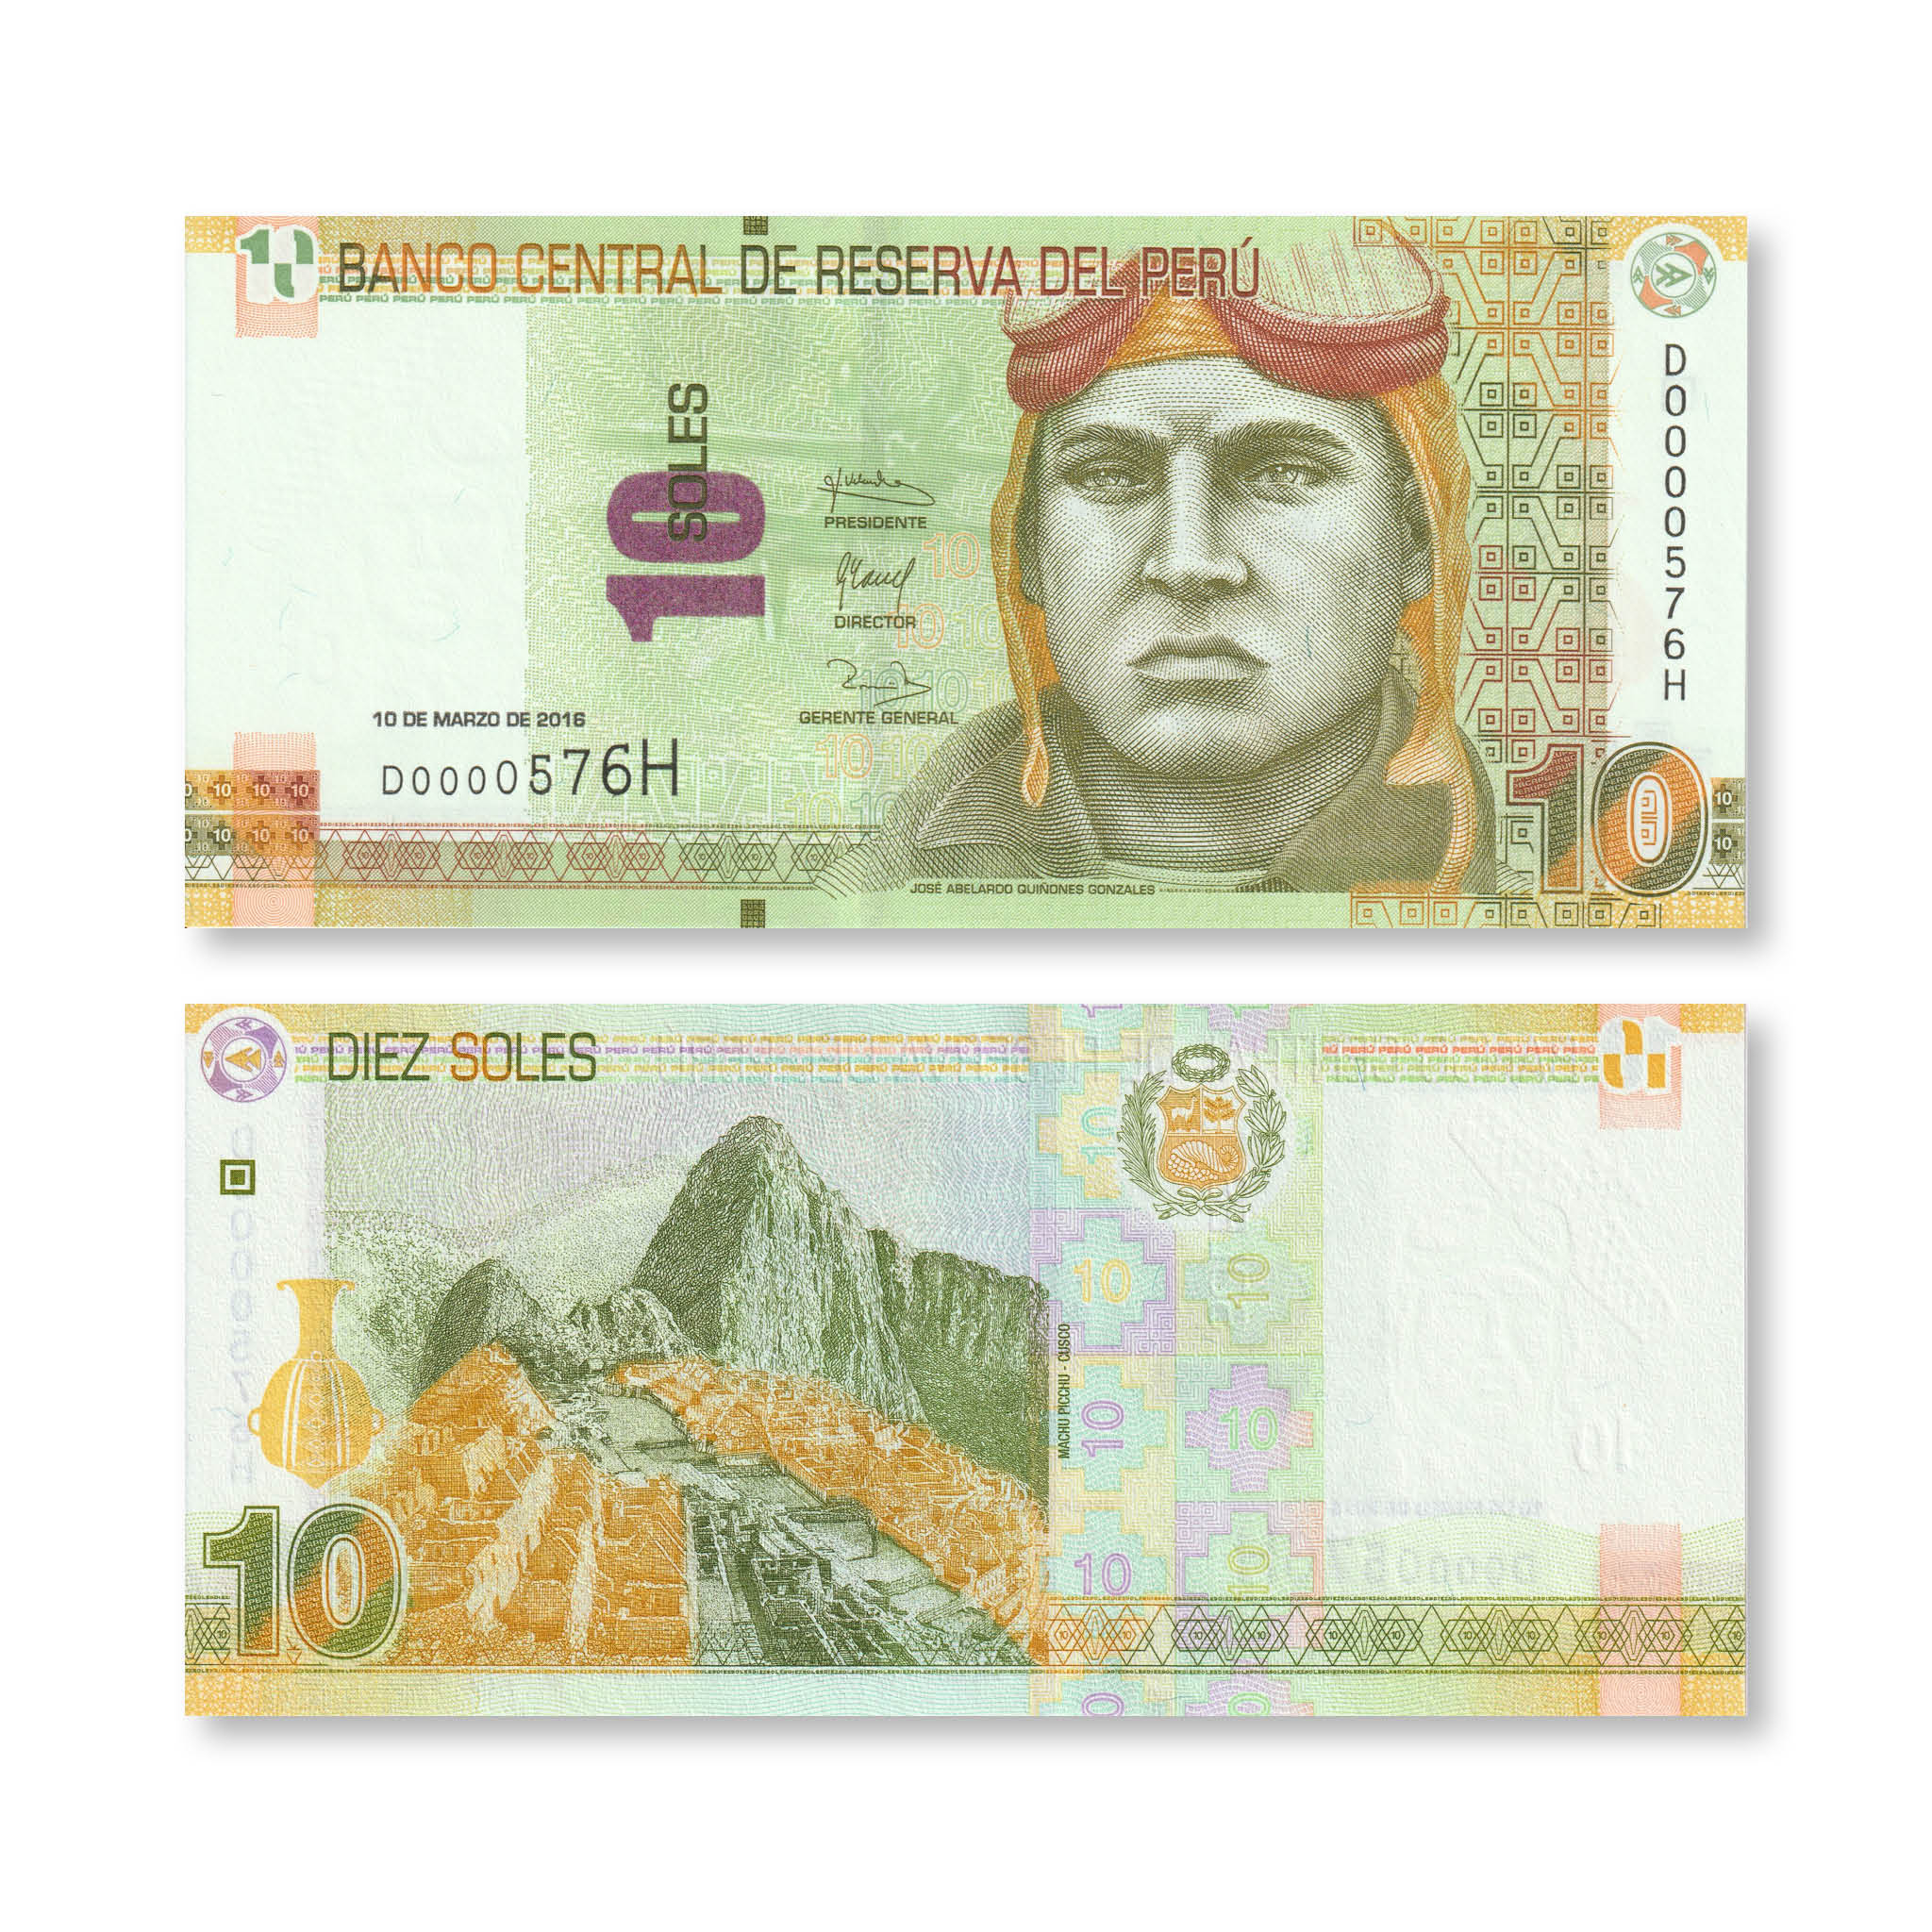 Peru 10 Soles, 2016 (2017), B532a, P192, UNC - Robert's World Money - World Banknotes